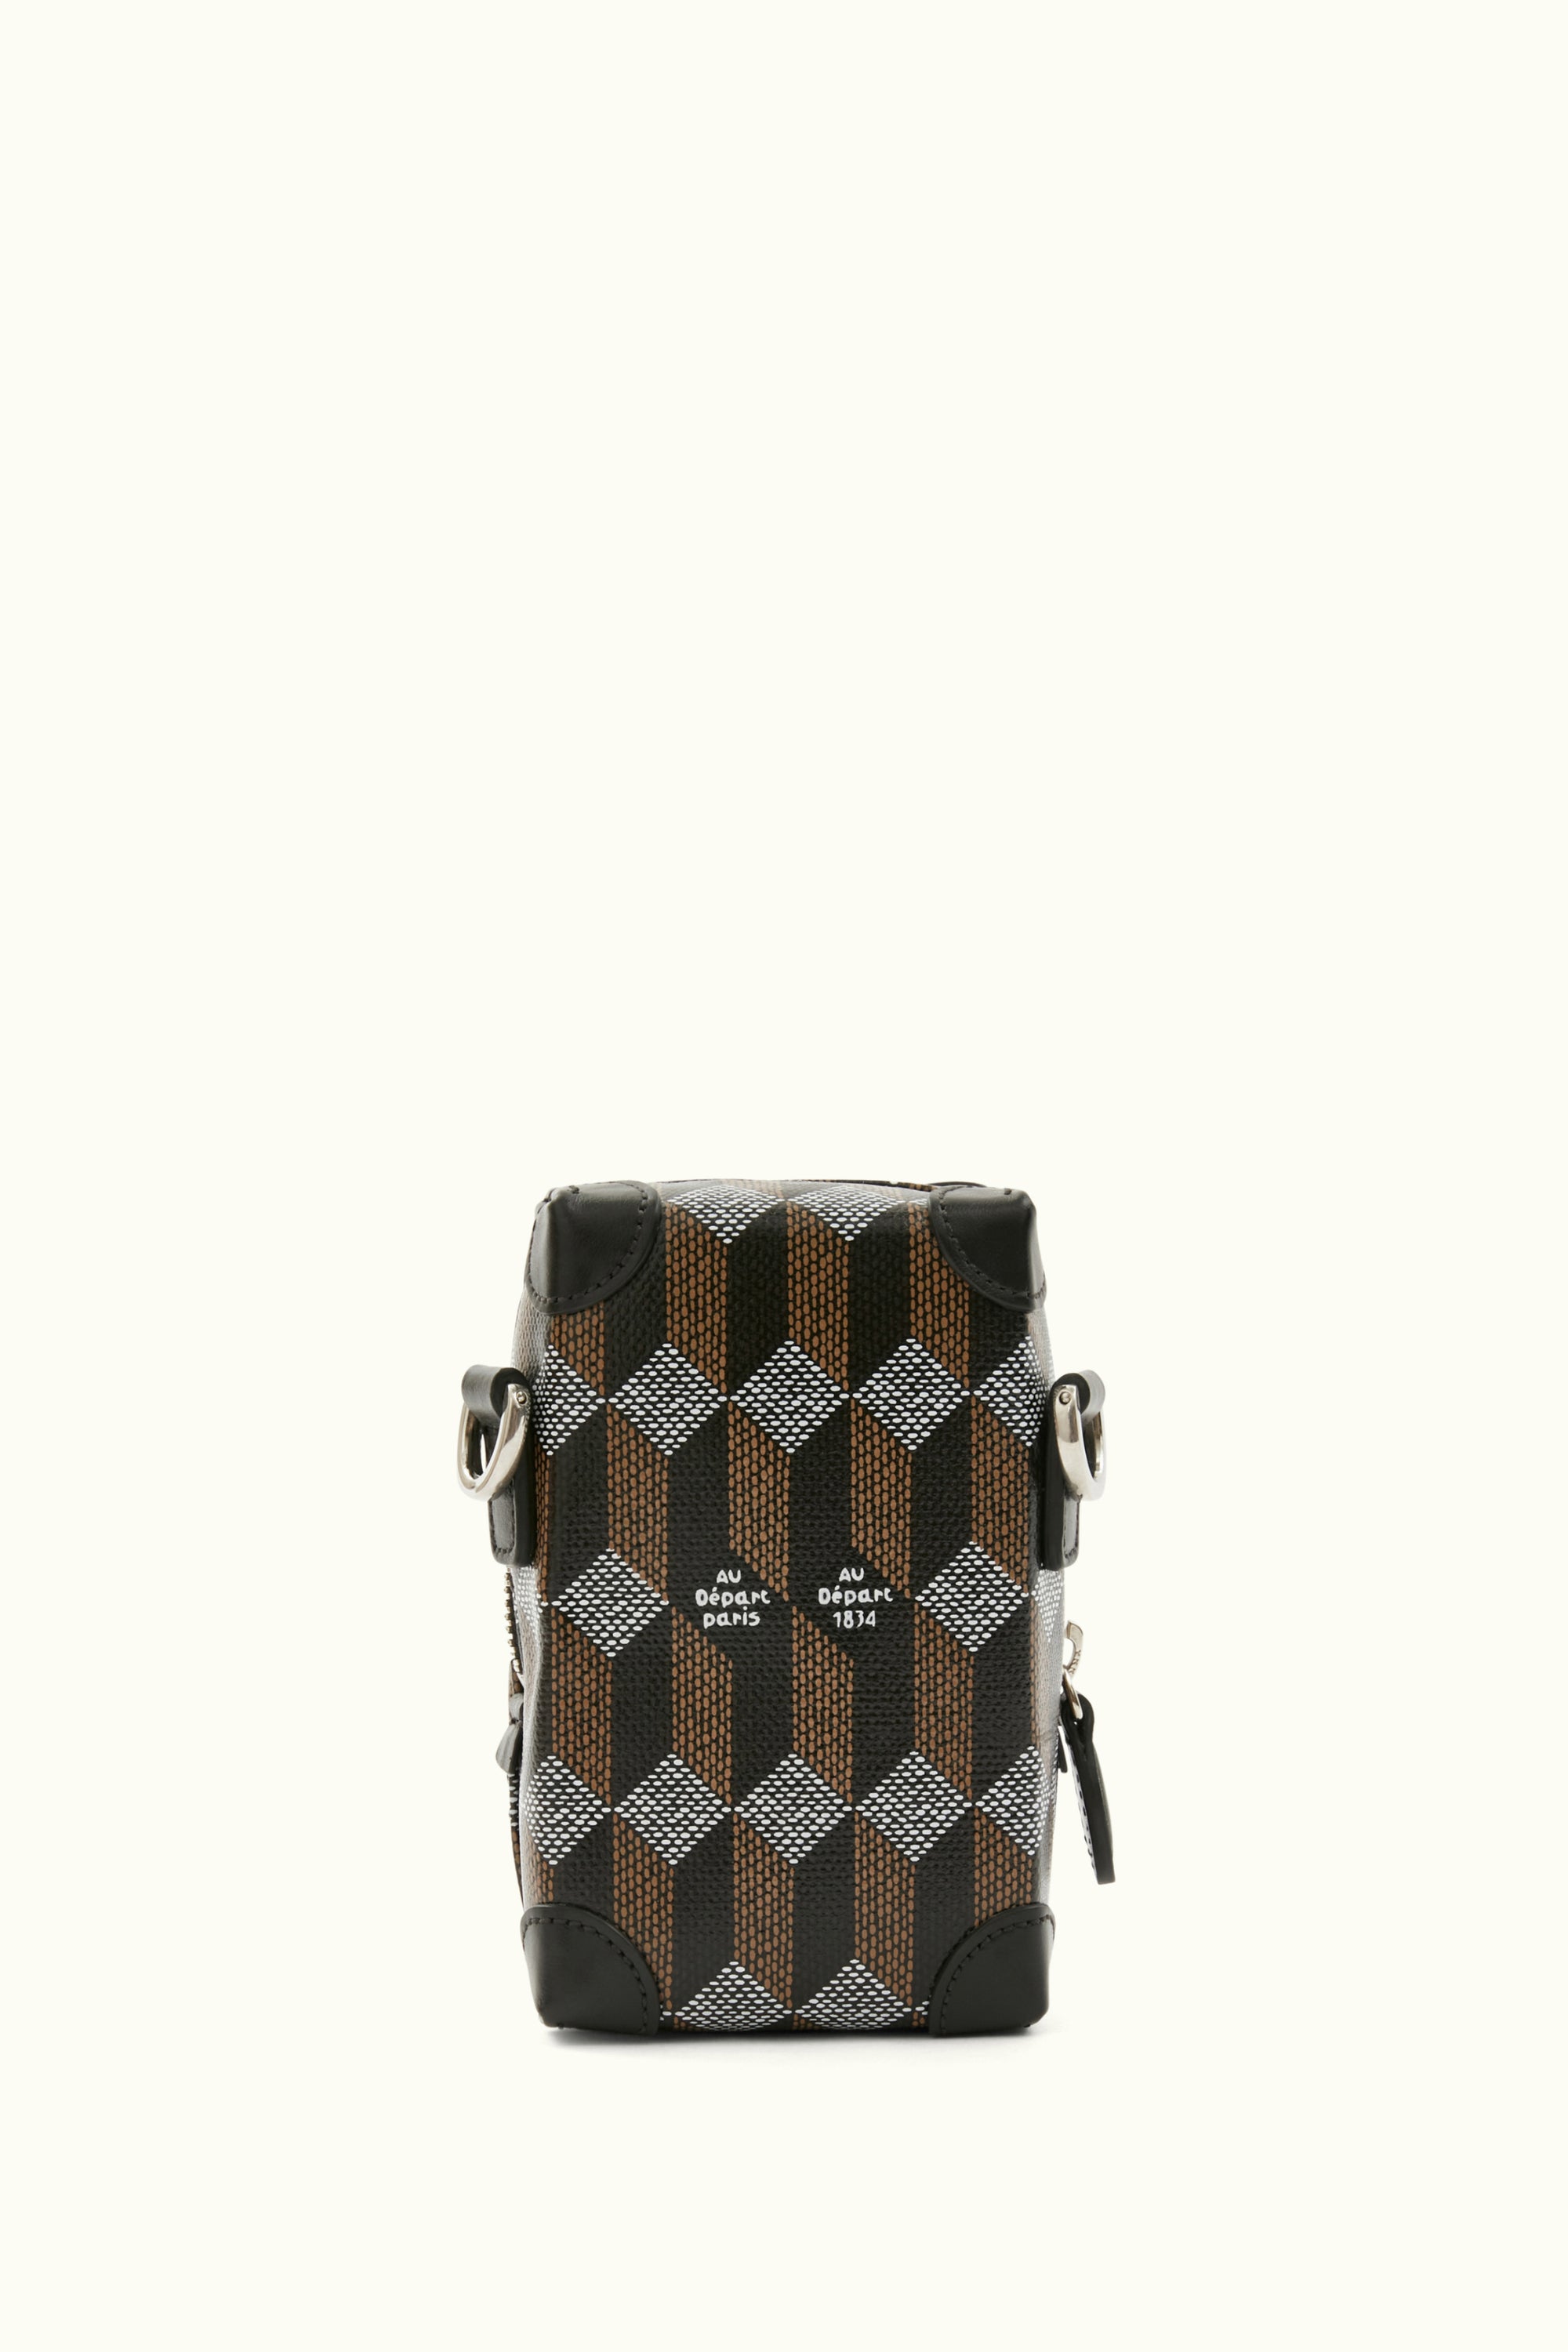 Louis Vuitton Monogram Vertical Soft Trunk, Louis Vuitton Handbags